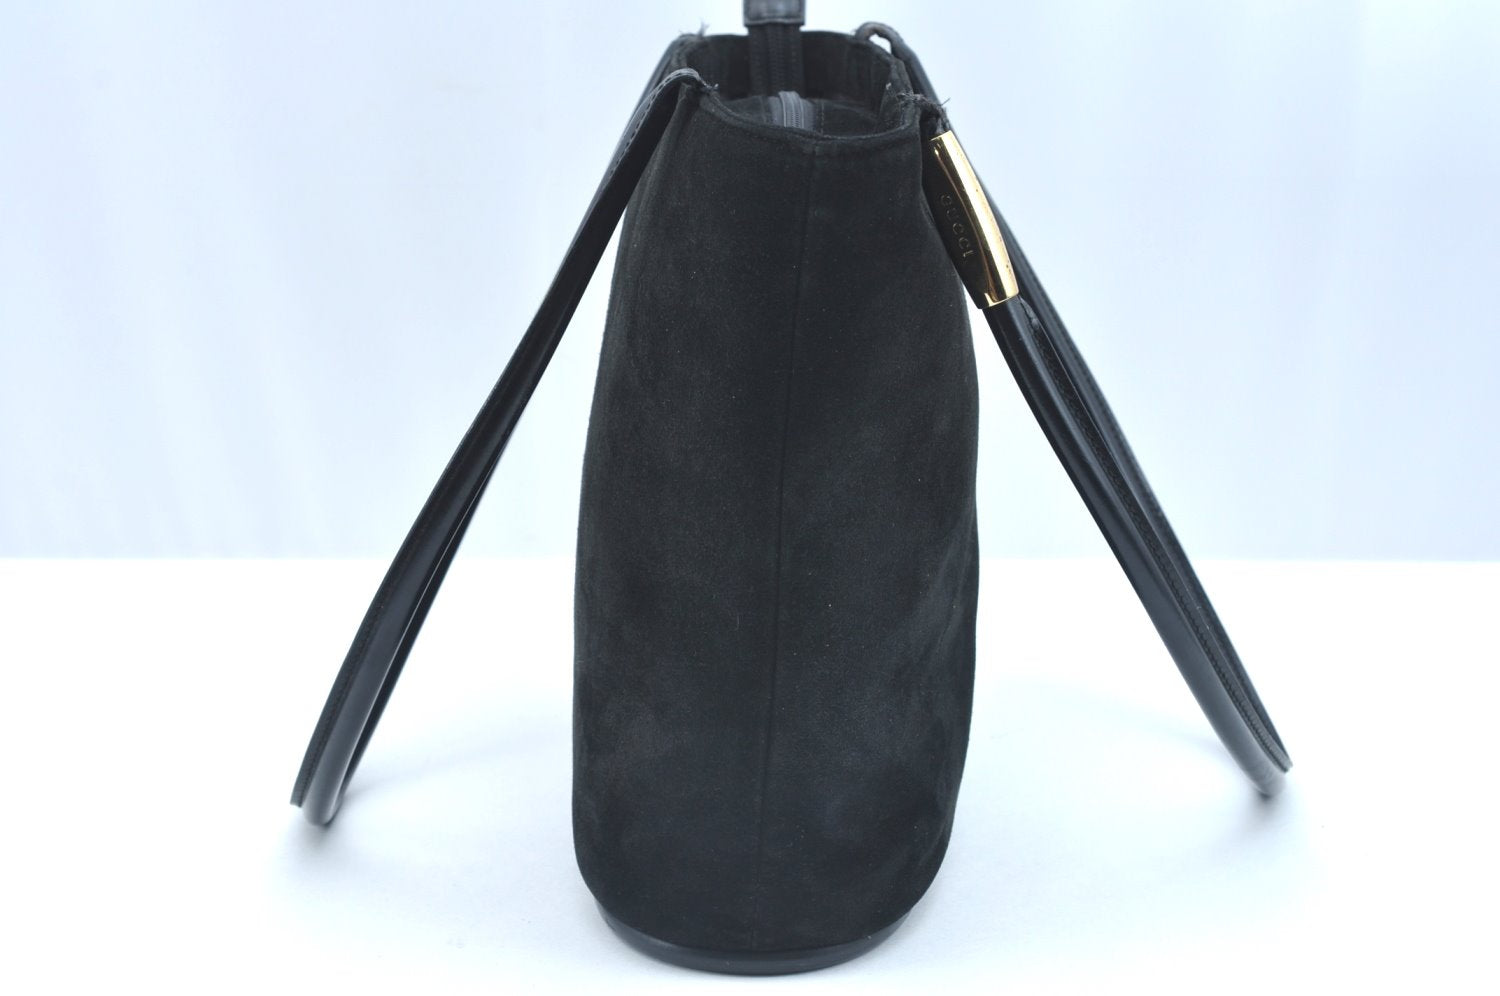 Authentic GUCCI Shoulder Tote Bag Suede Leather Black Junk K5320